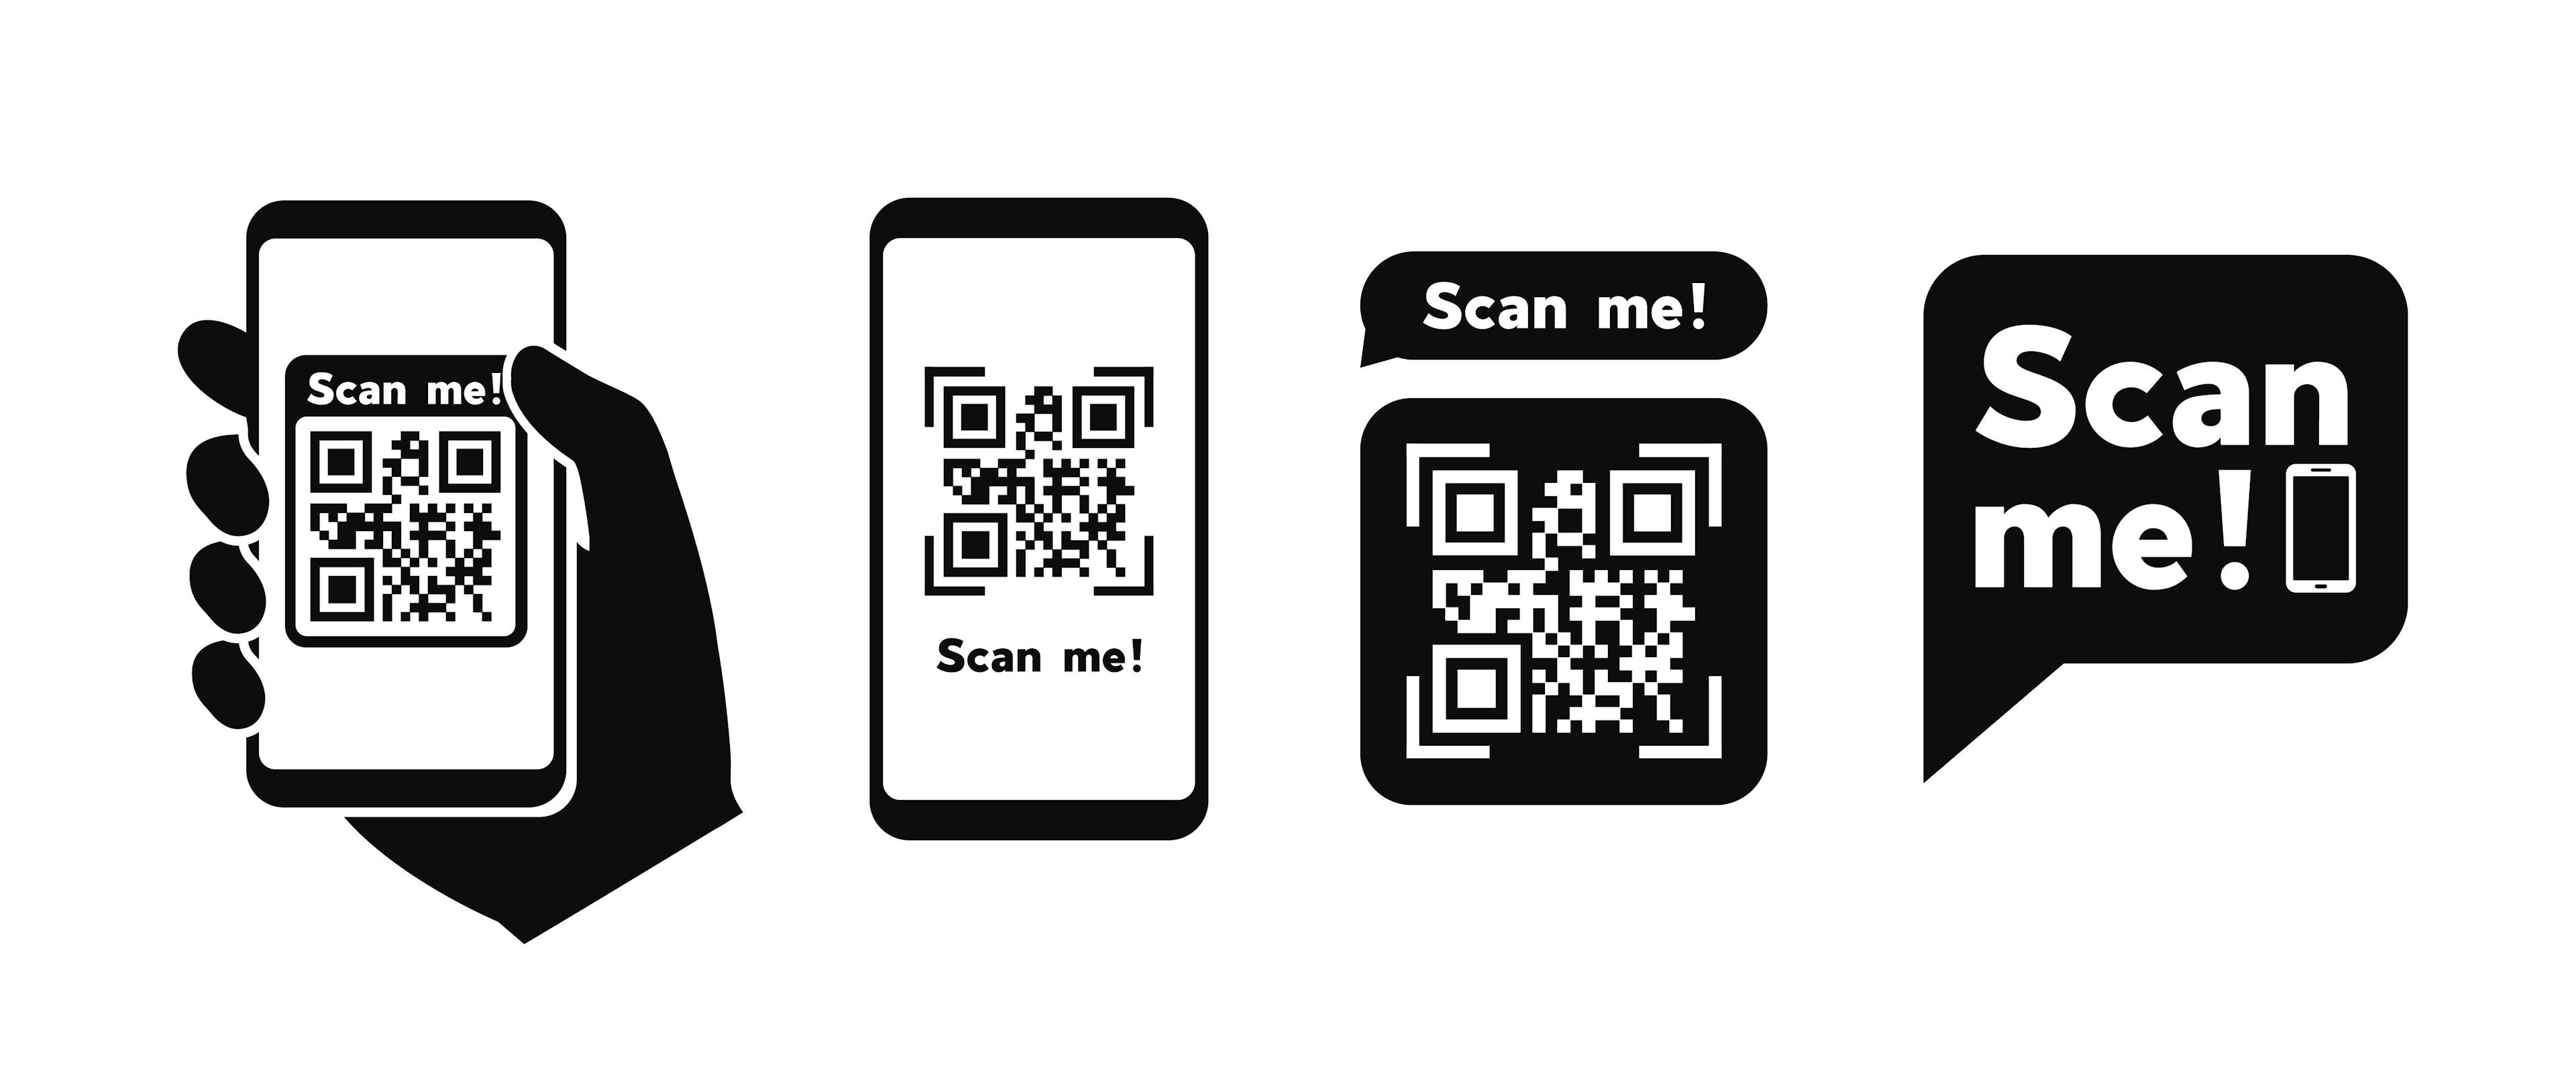 Scan QR code flat icon with phone. Barcode. Vector illustration. Credit: 4zevar - stock.adobe.com